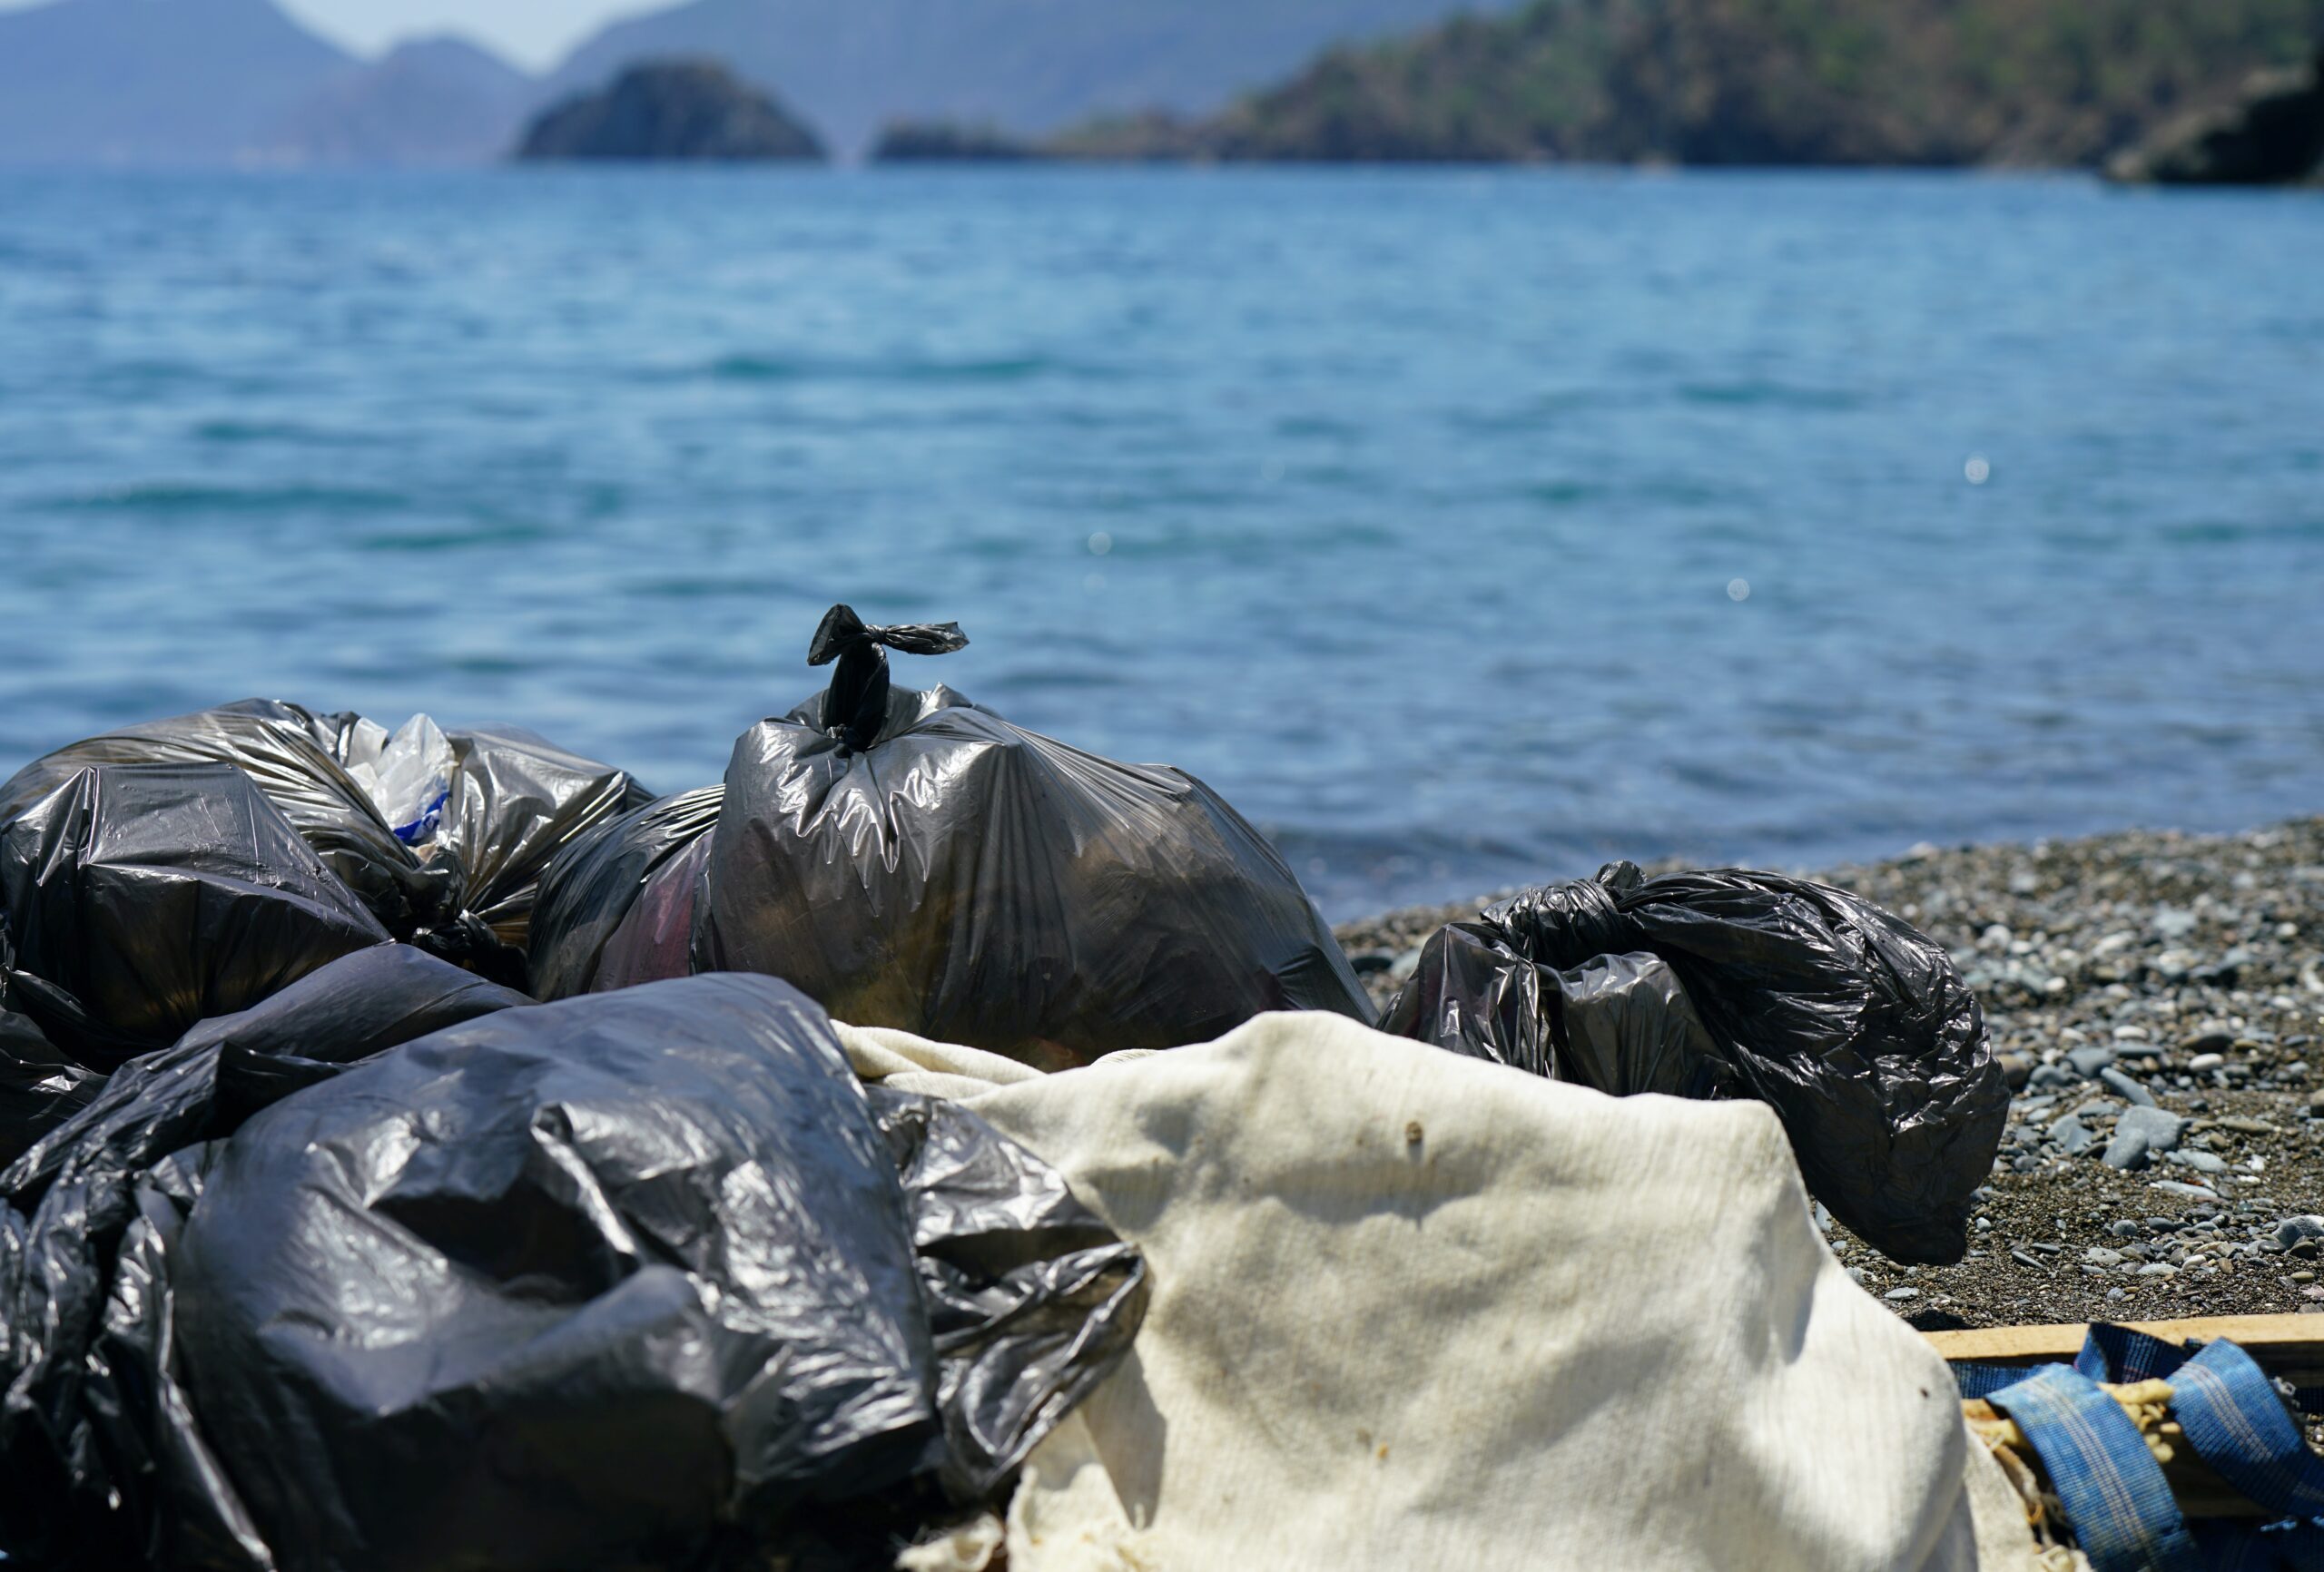 Biodegradable Trash Bags 